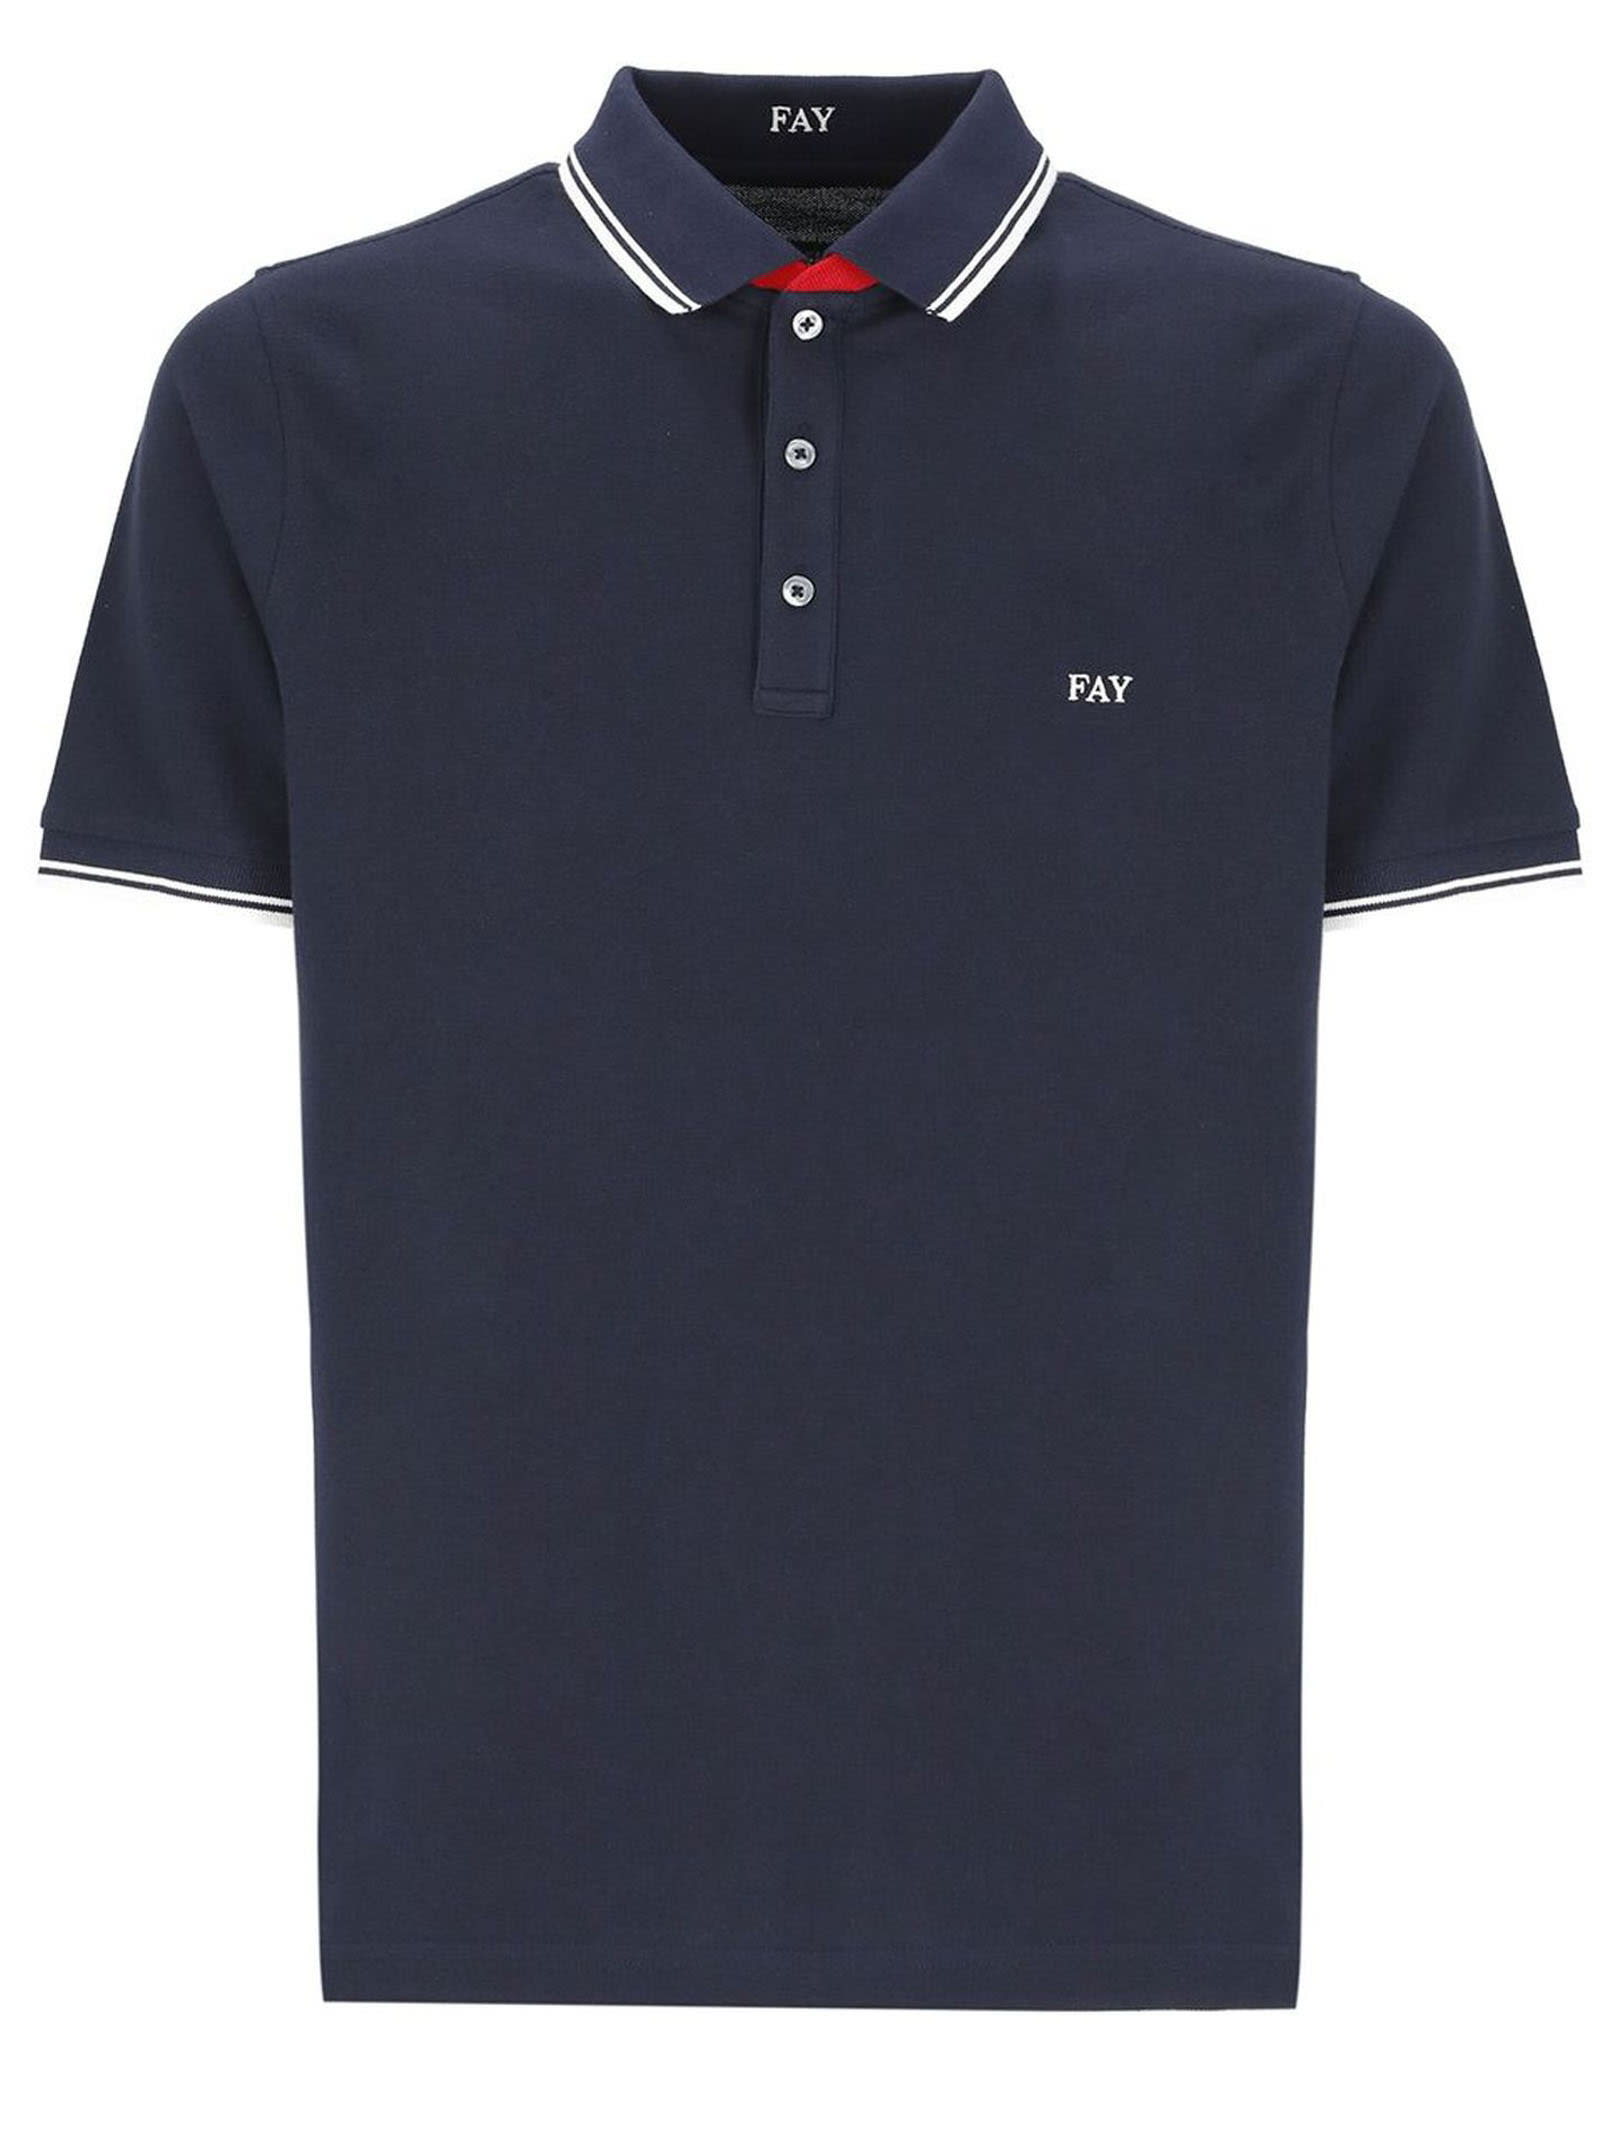 Blue Cotton Polo Shirt